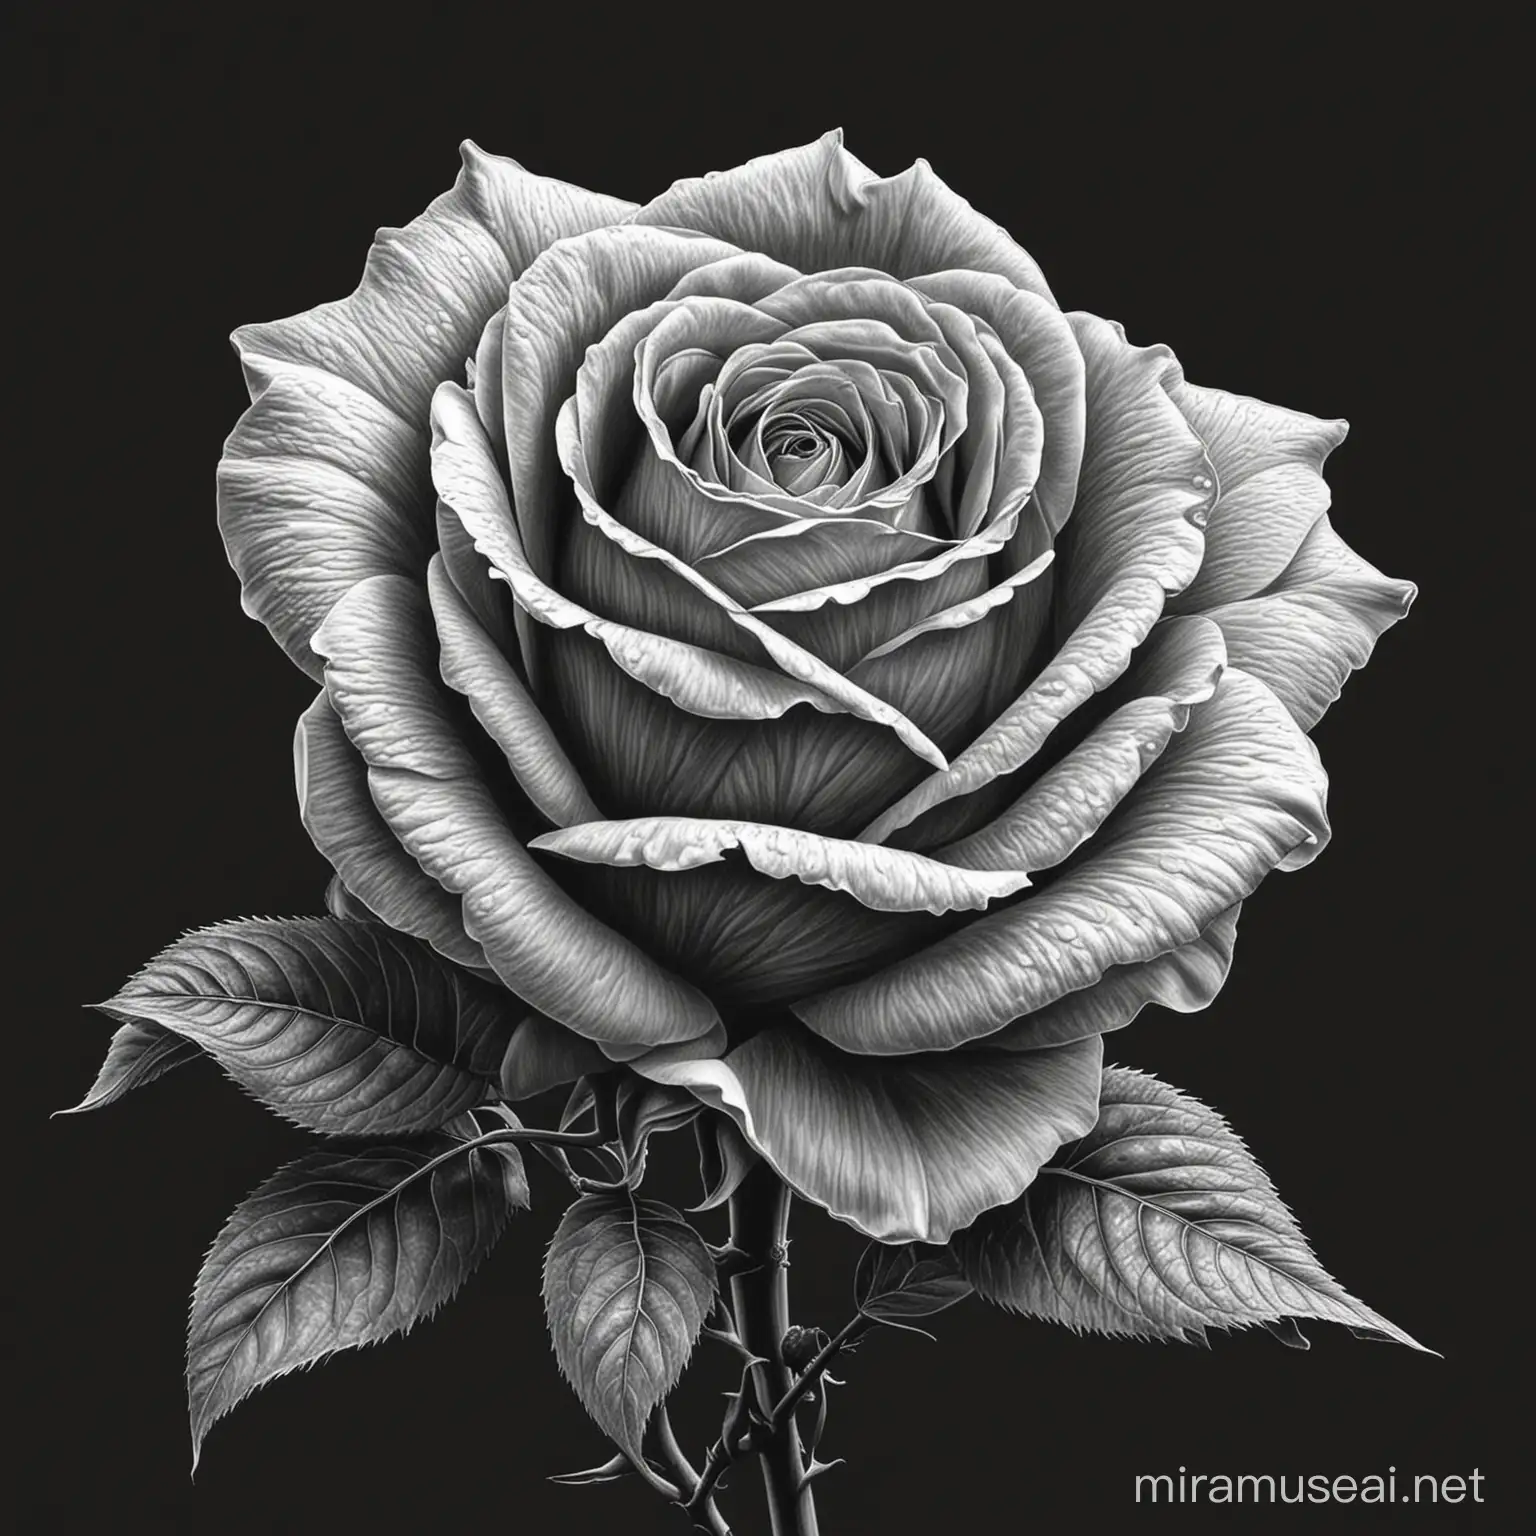 Elegant Rose Illustration with White Petals on Black Background